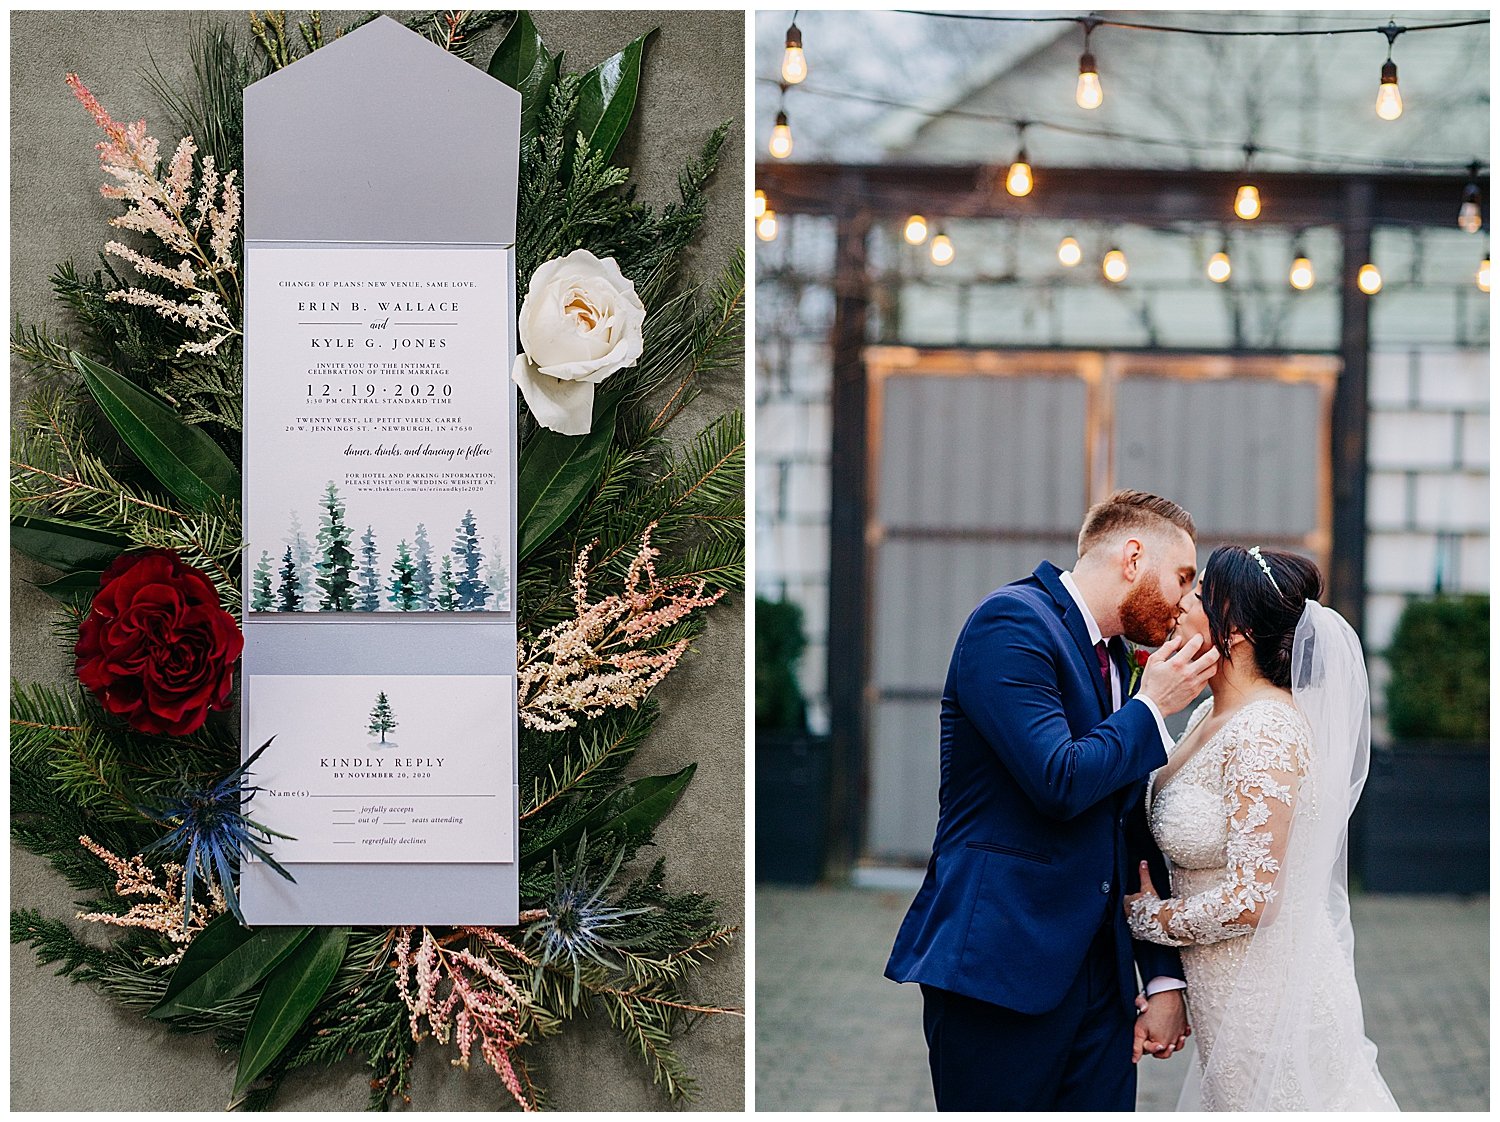 Erin + Kyle's Intimate December Wedding — KENTUCKY BRIDE MAGAZINE